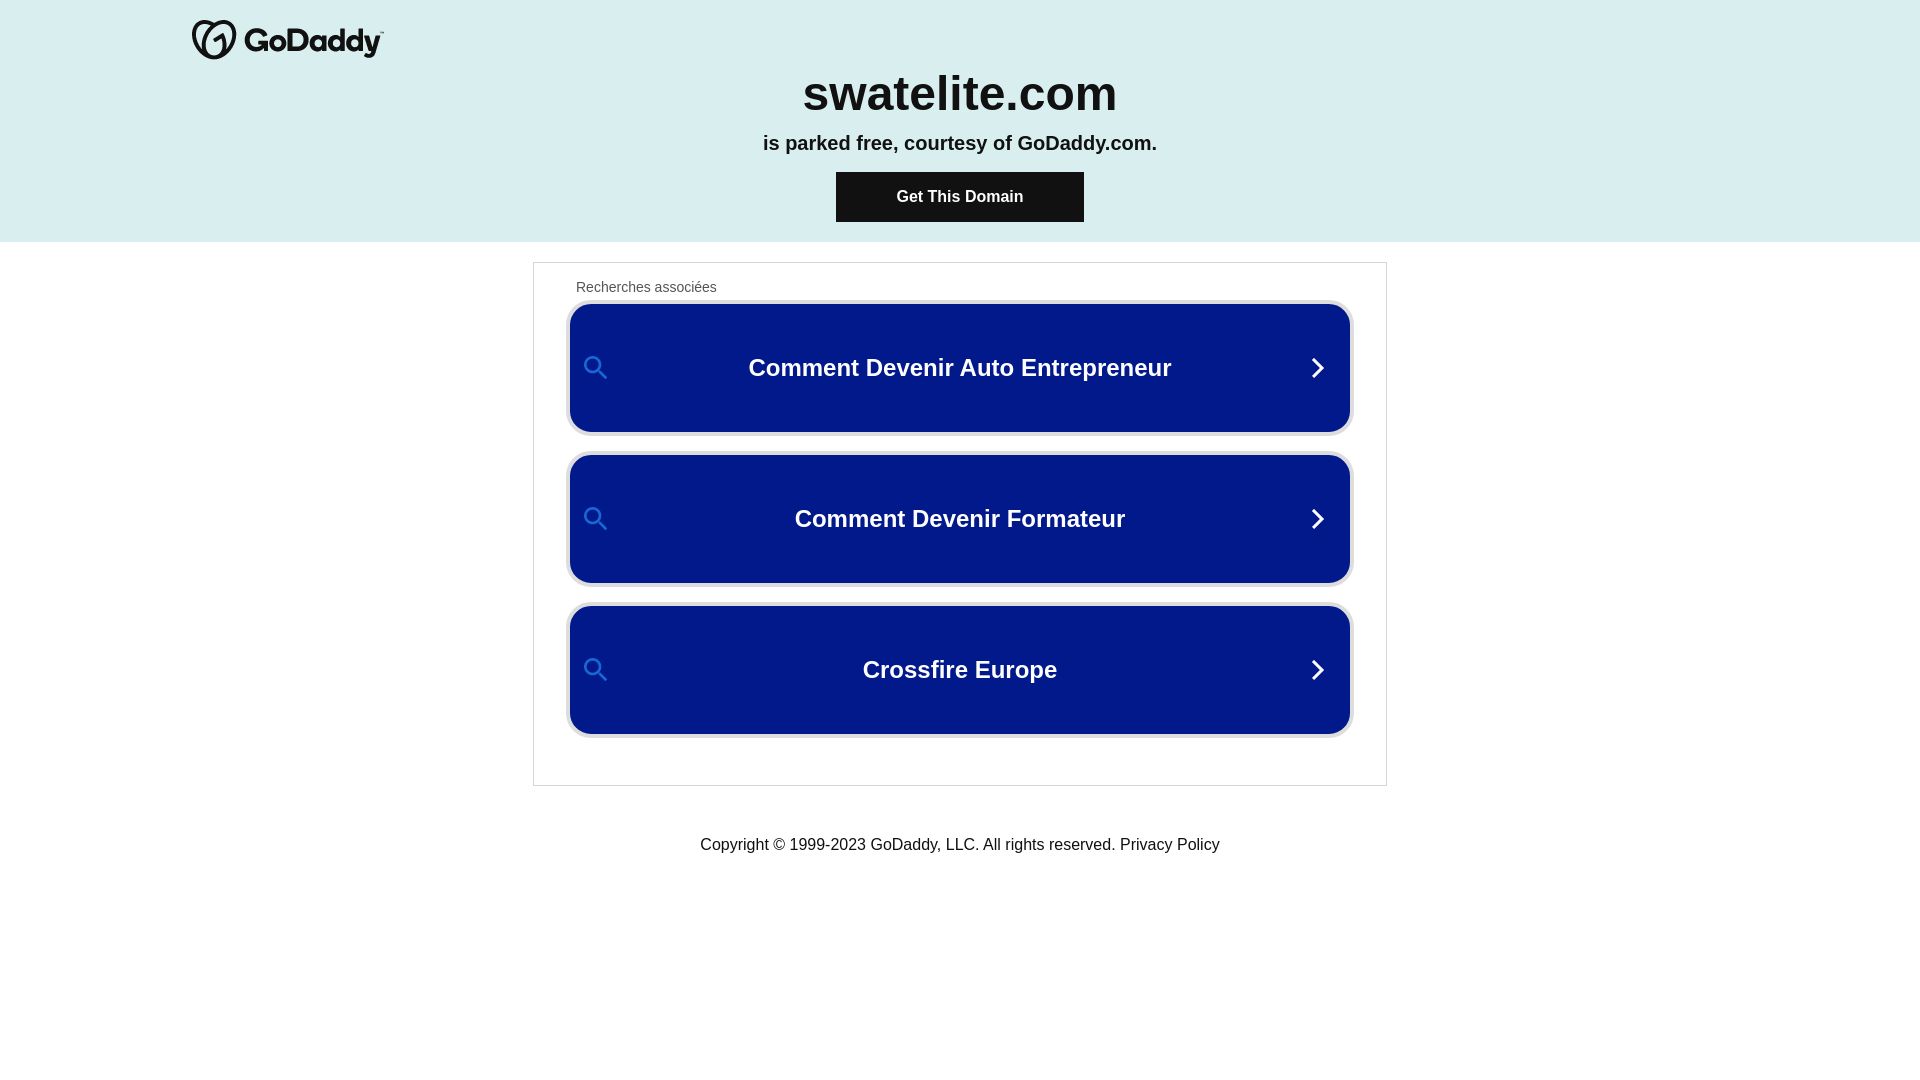 Website status swatelite.com is   ONLINE